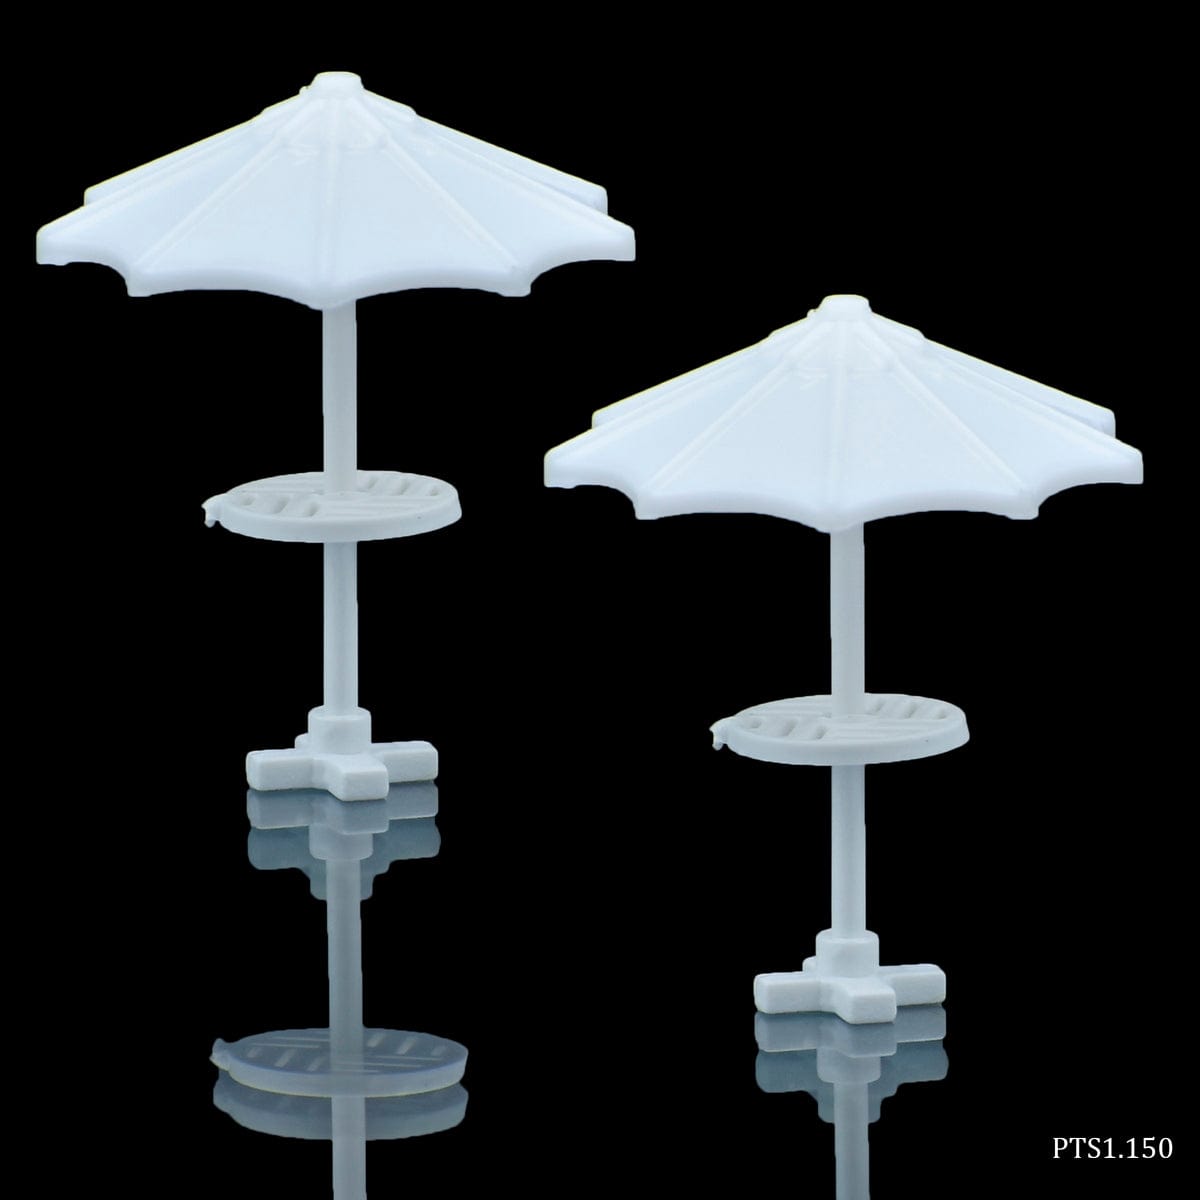 jags-mumbai Miniature Model Miniature Model Umbrella Set Of 2 Pics PTS1.150